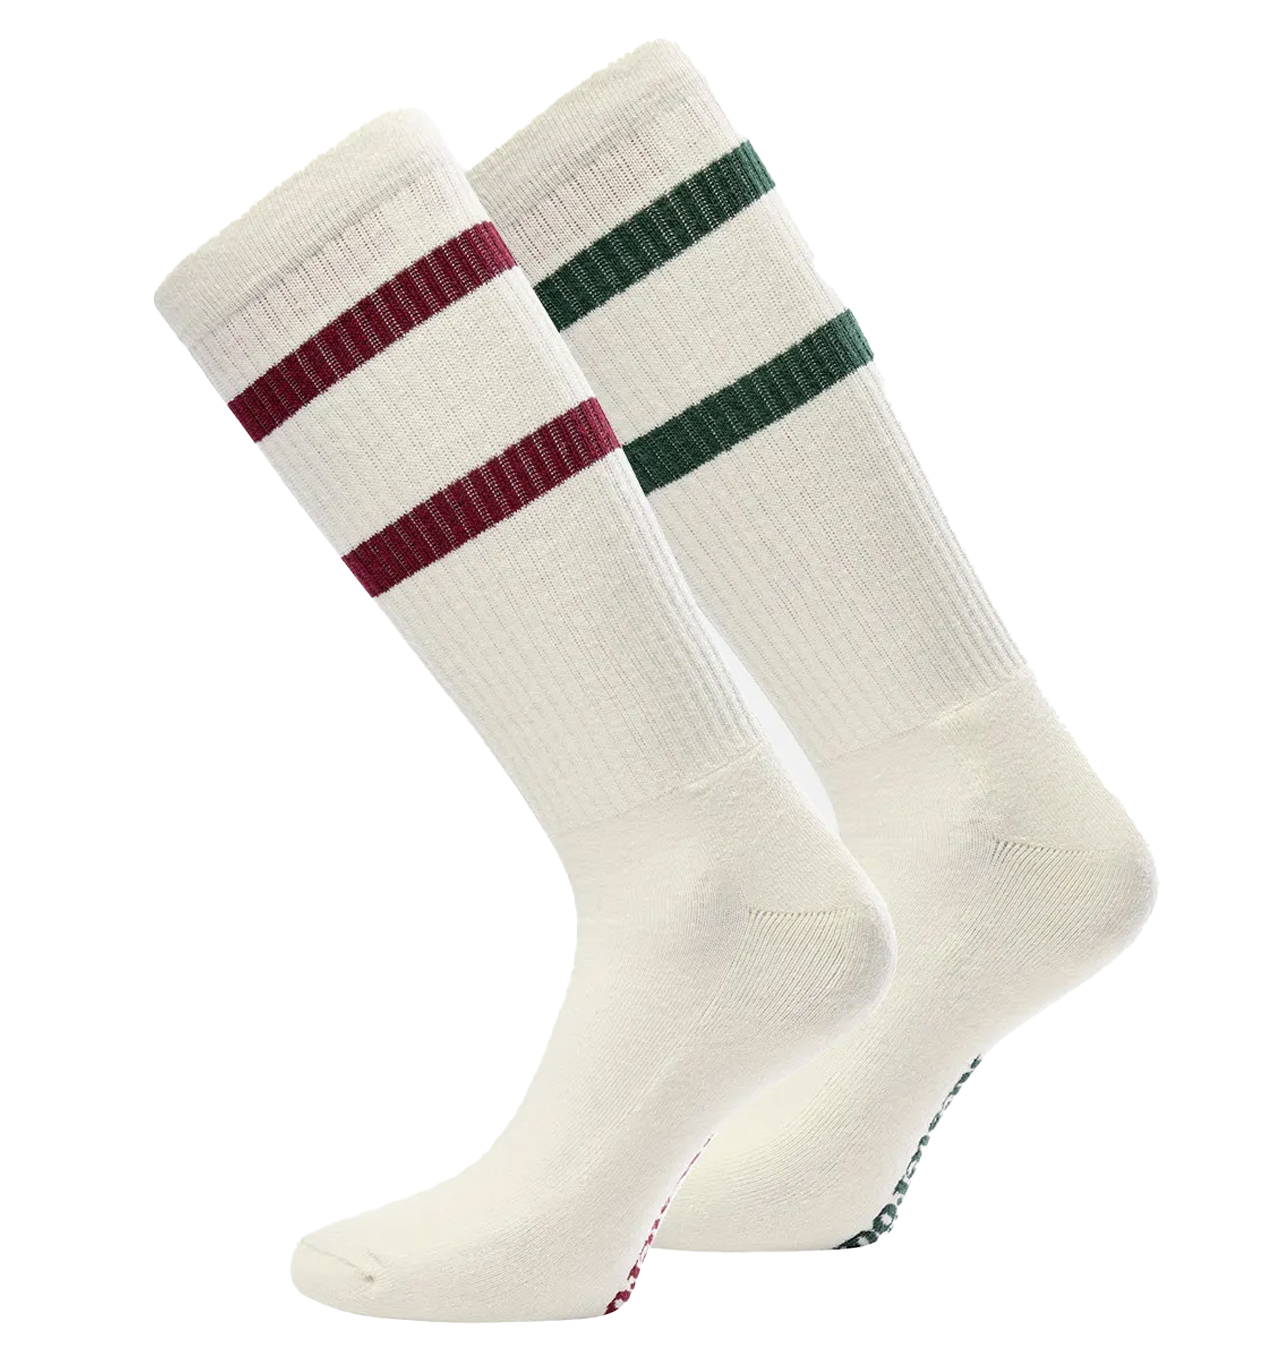 Resterods---Tennis-Socks-2-pack---Ecru-Red-Green